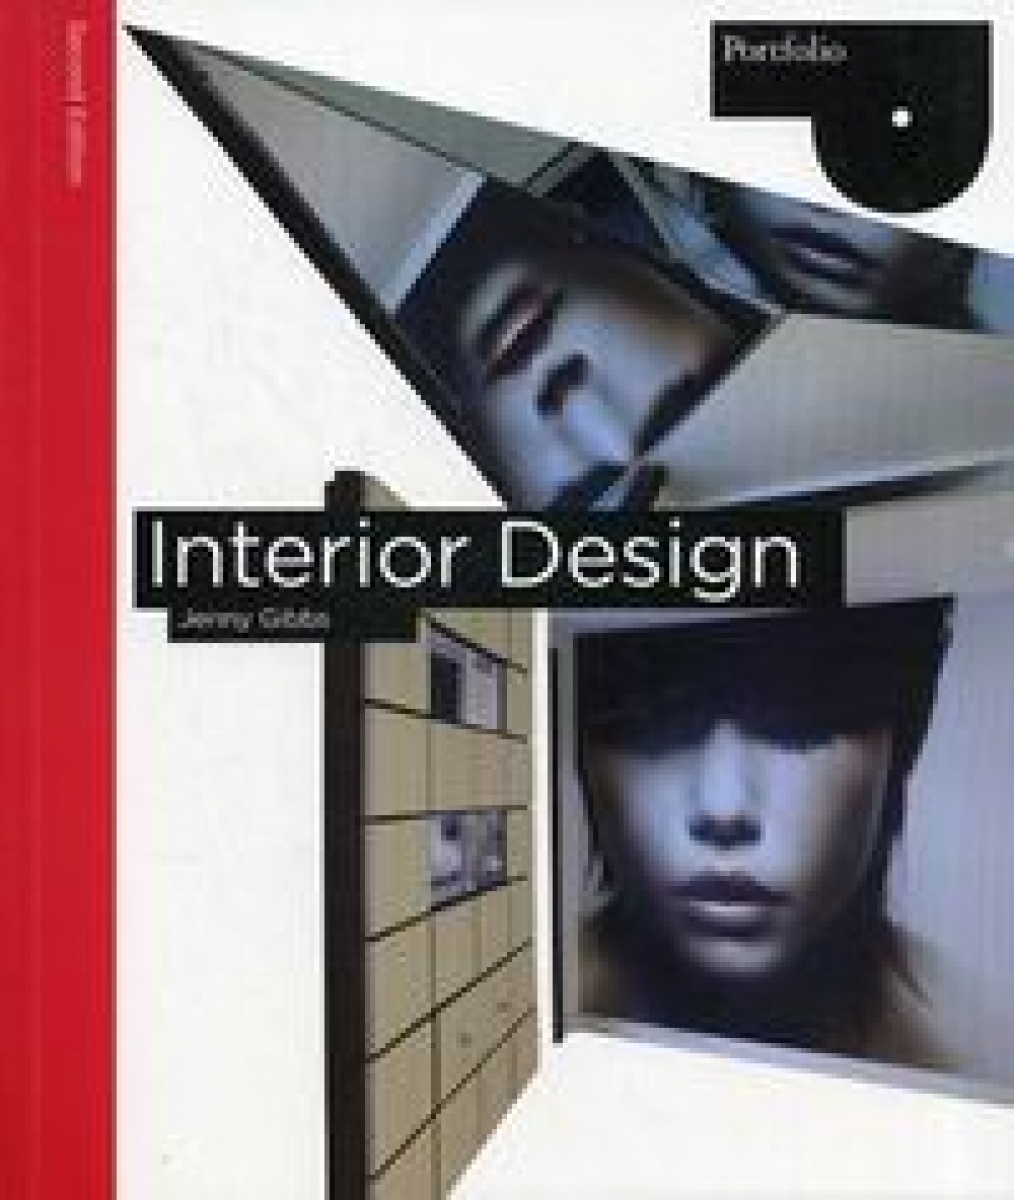 Gibbs J. Interior Design. Second edition 